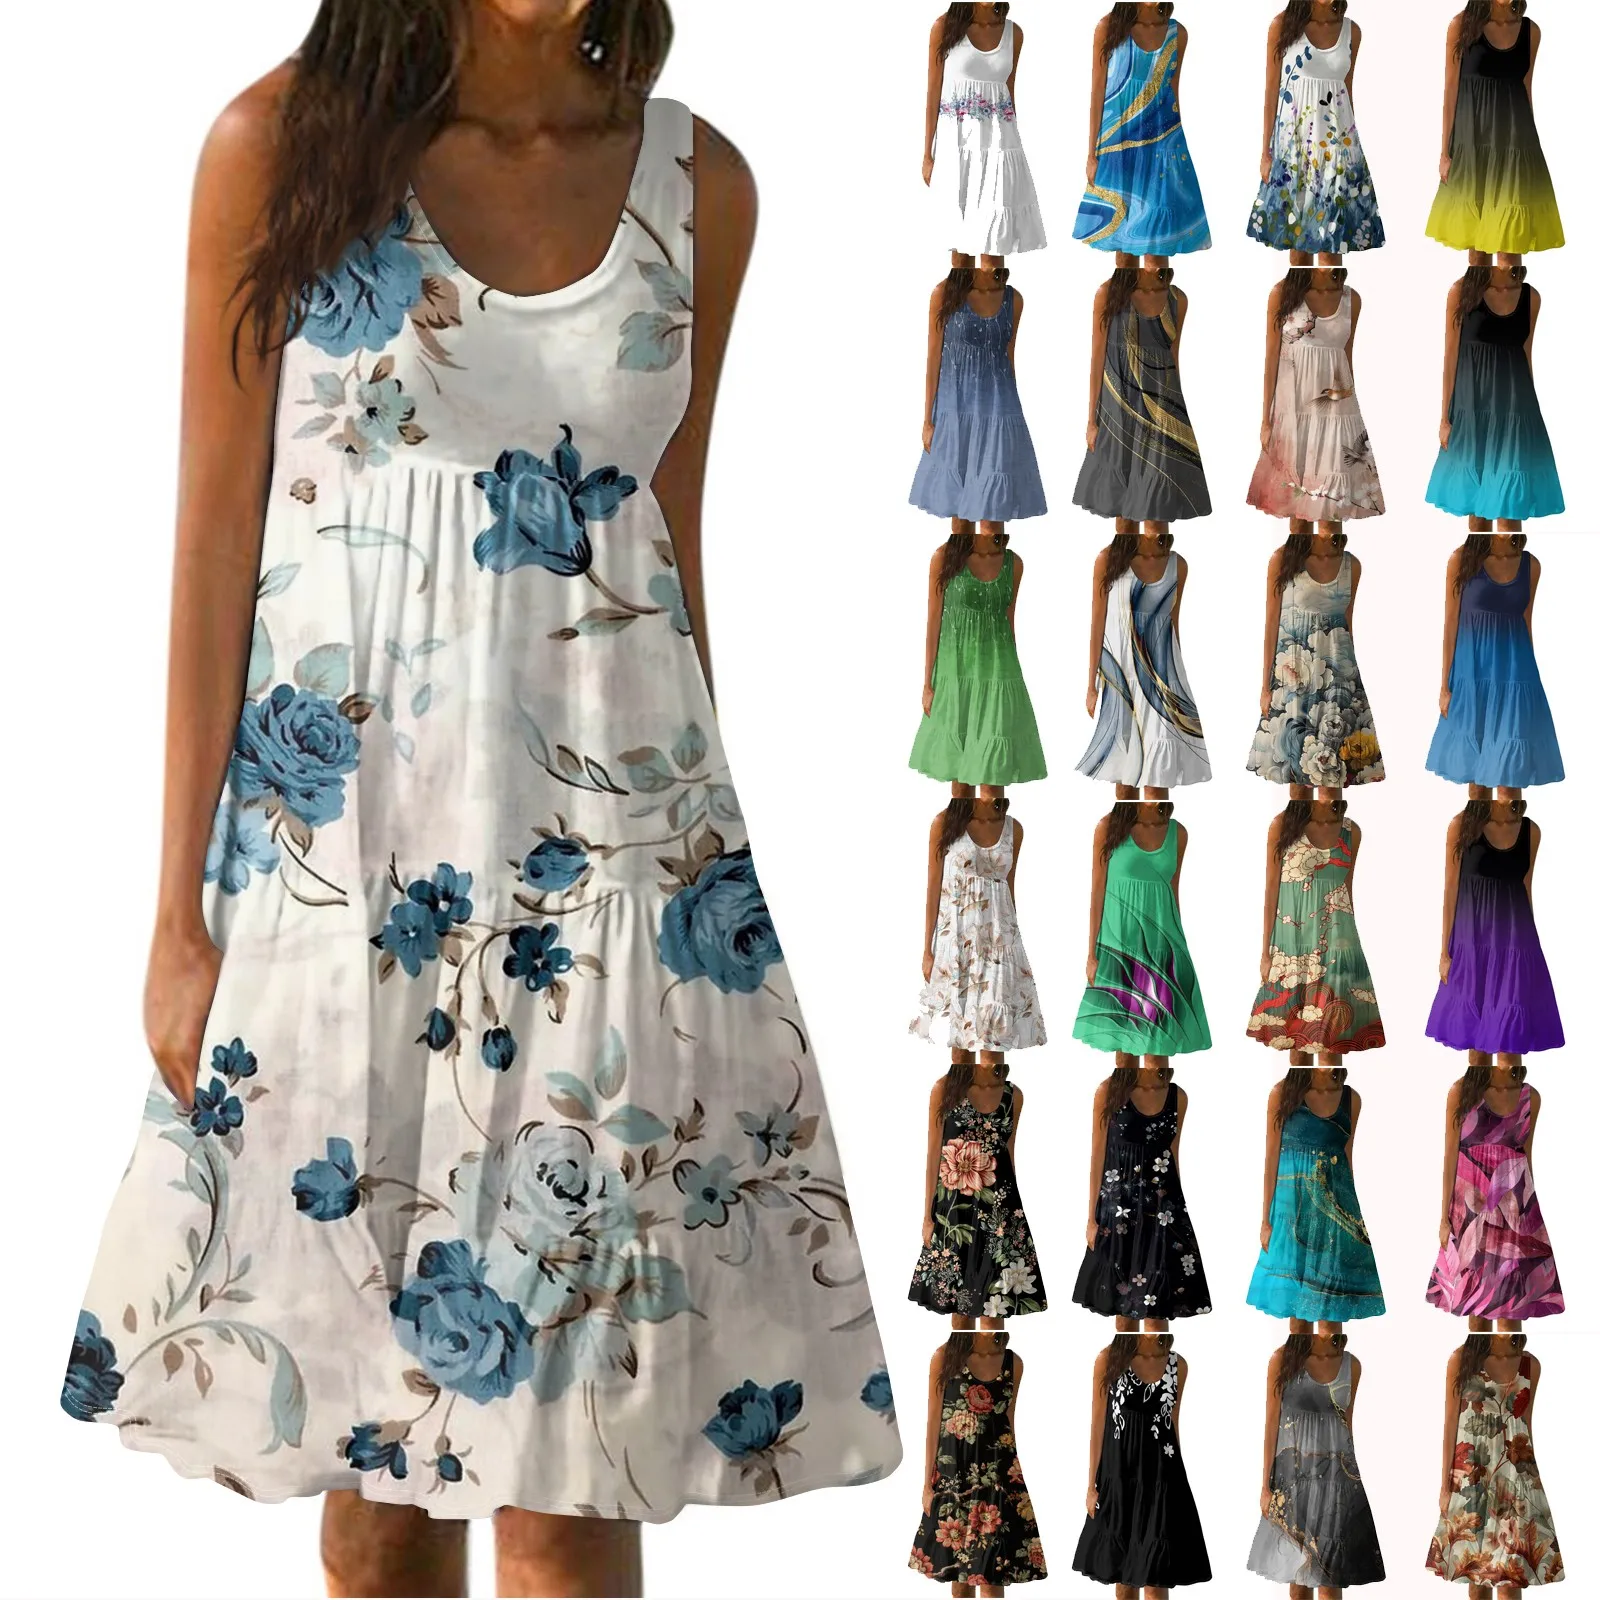 

Women's Summer Fashion Sleeveless Dresses Printed Loose Splicing Casual Beach Dress New Simple Elegant Dress فساتين طويلة